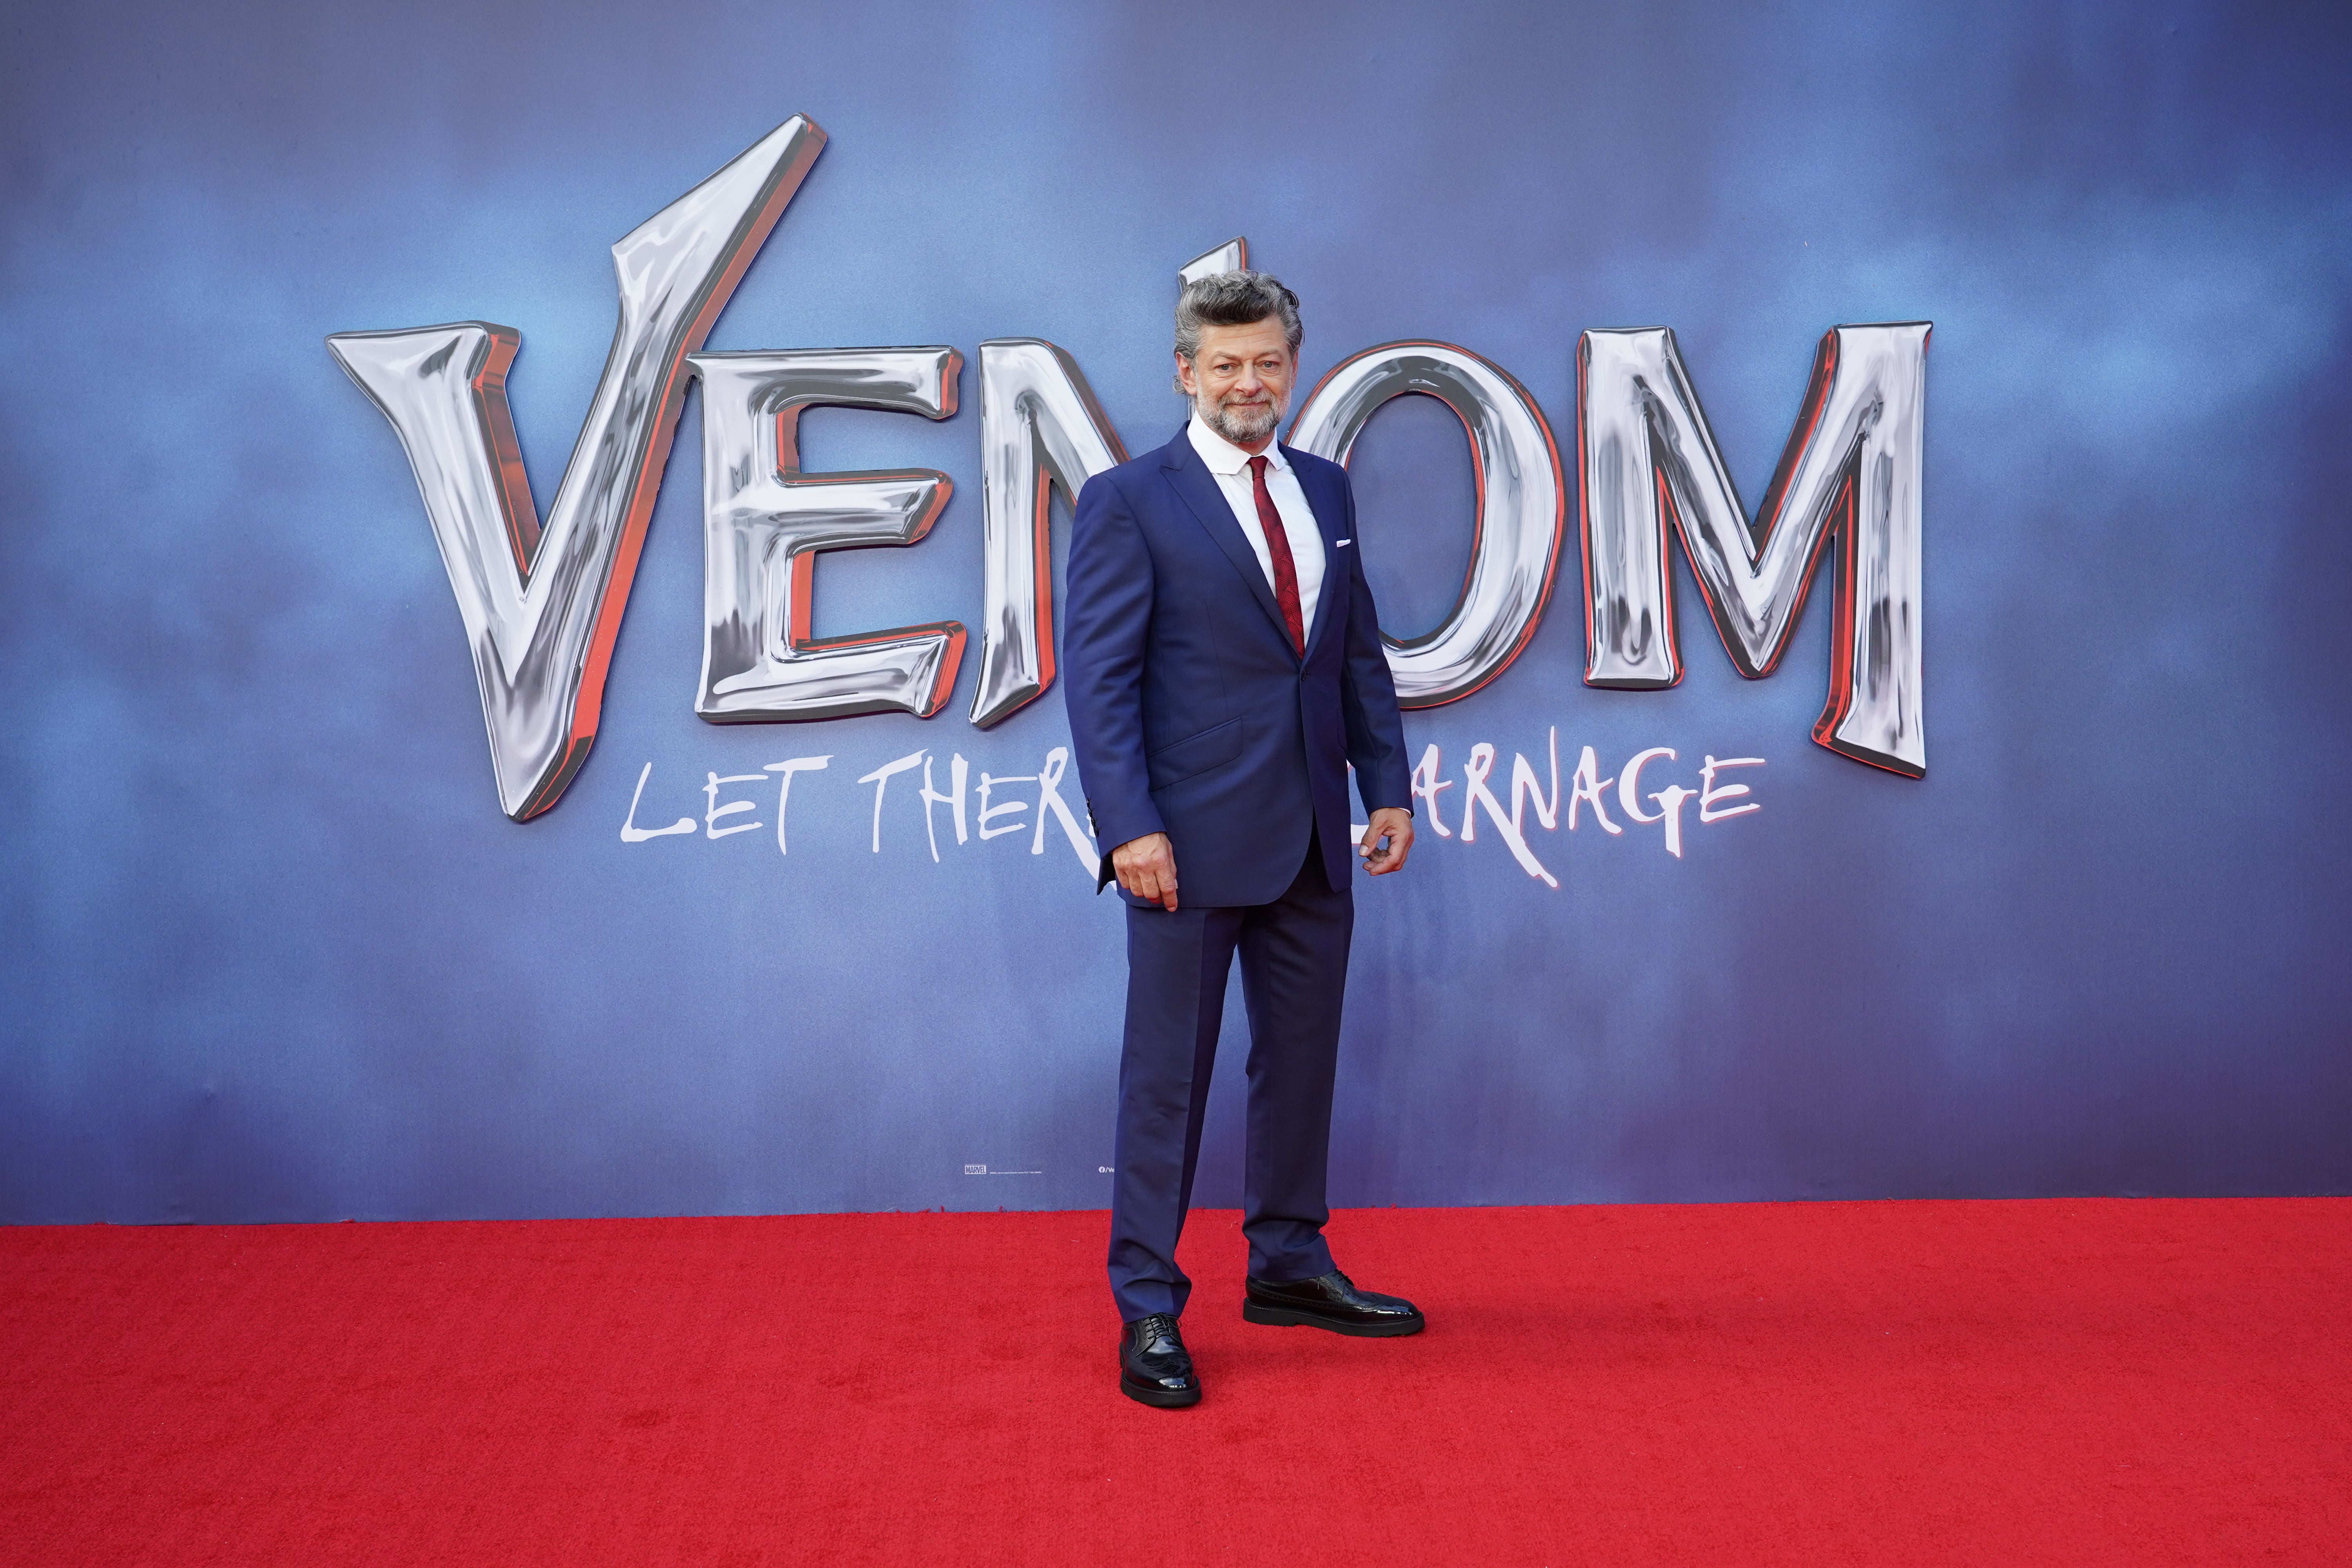 Tom Hardy calls 'Marvel's Spider-Man 2' Venom actor a legend